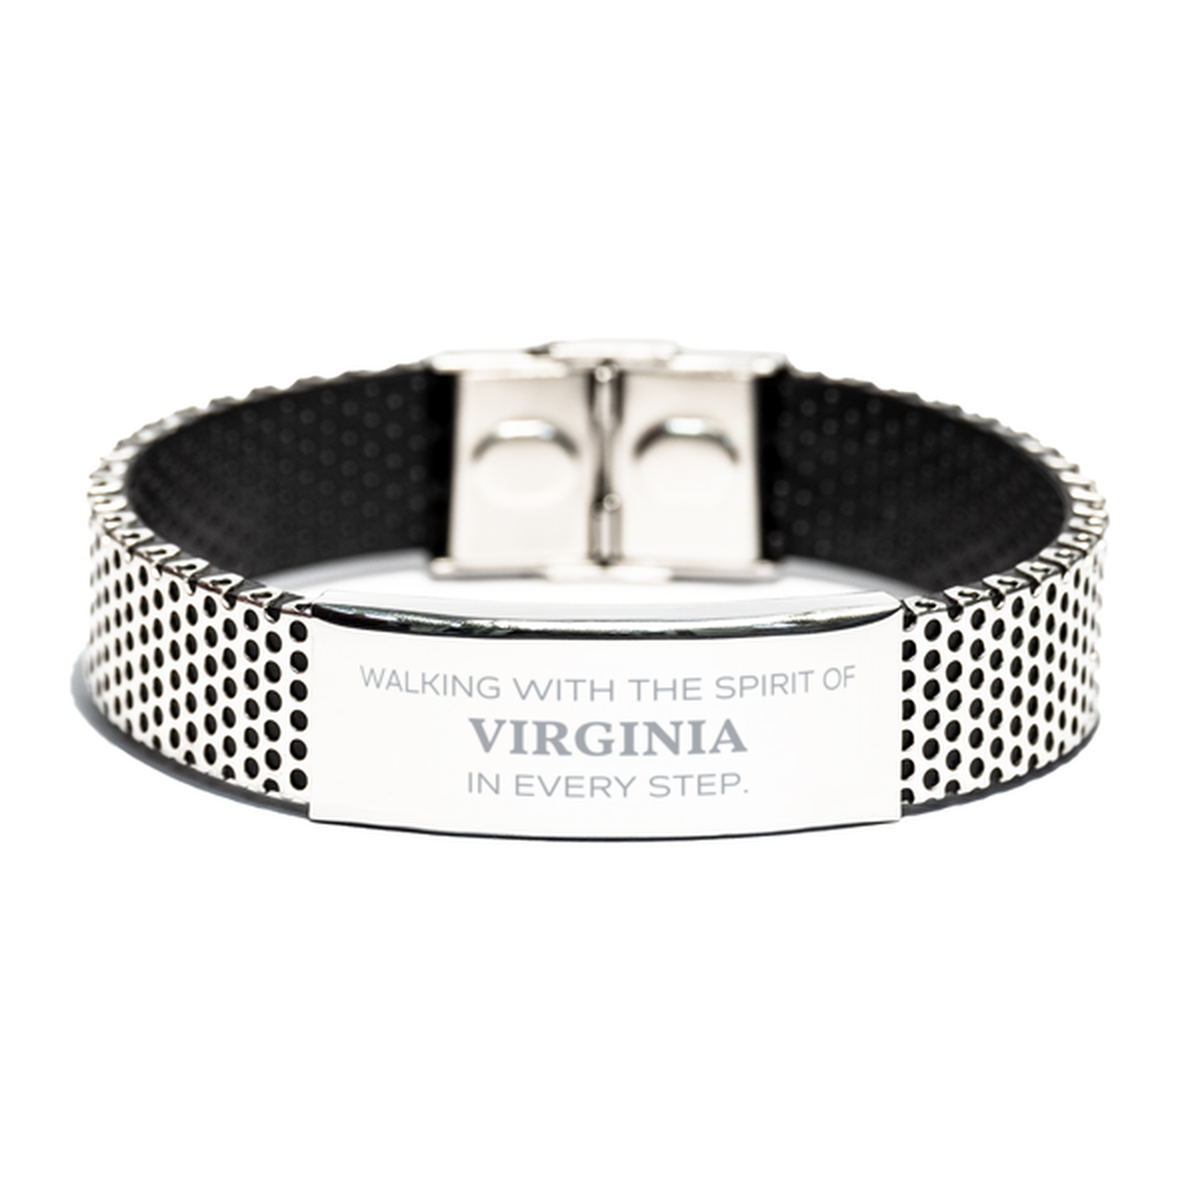 Virginia Gifts, Walking with the spirit, Love Virginia Birthday Christmas Stainless Steel Bracelet For Virginia People, Men, Women, Friends